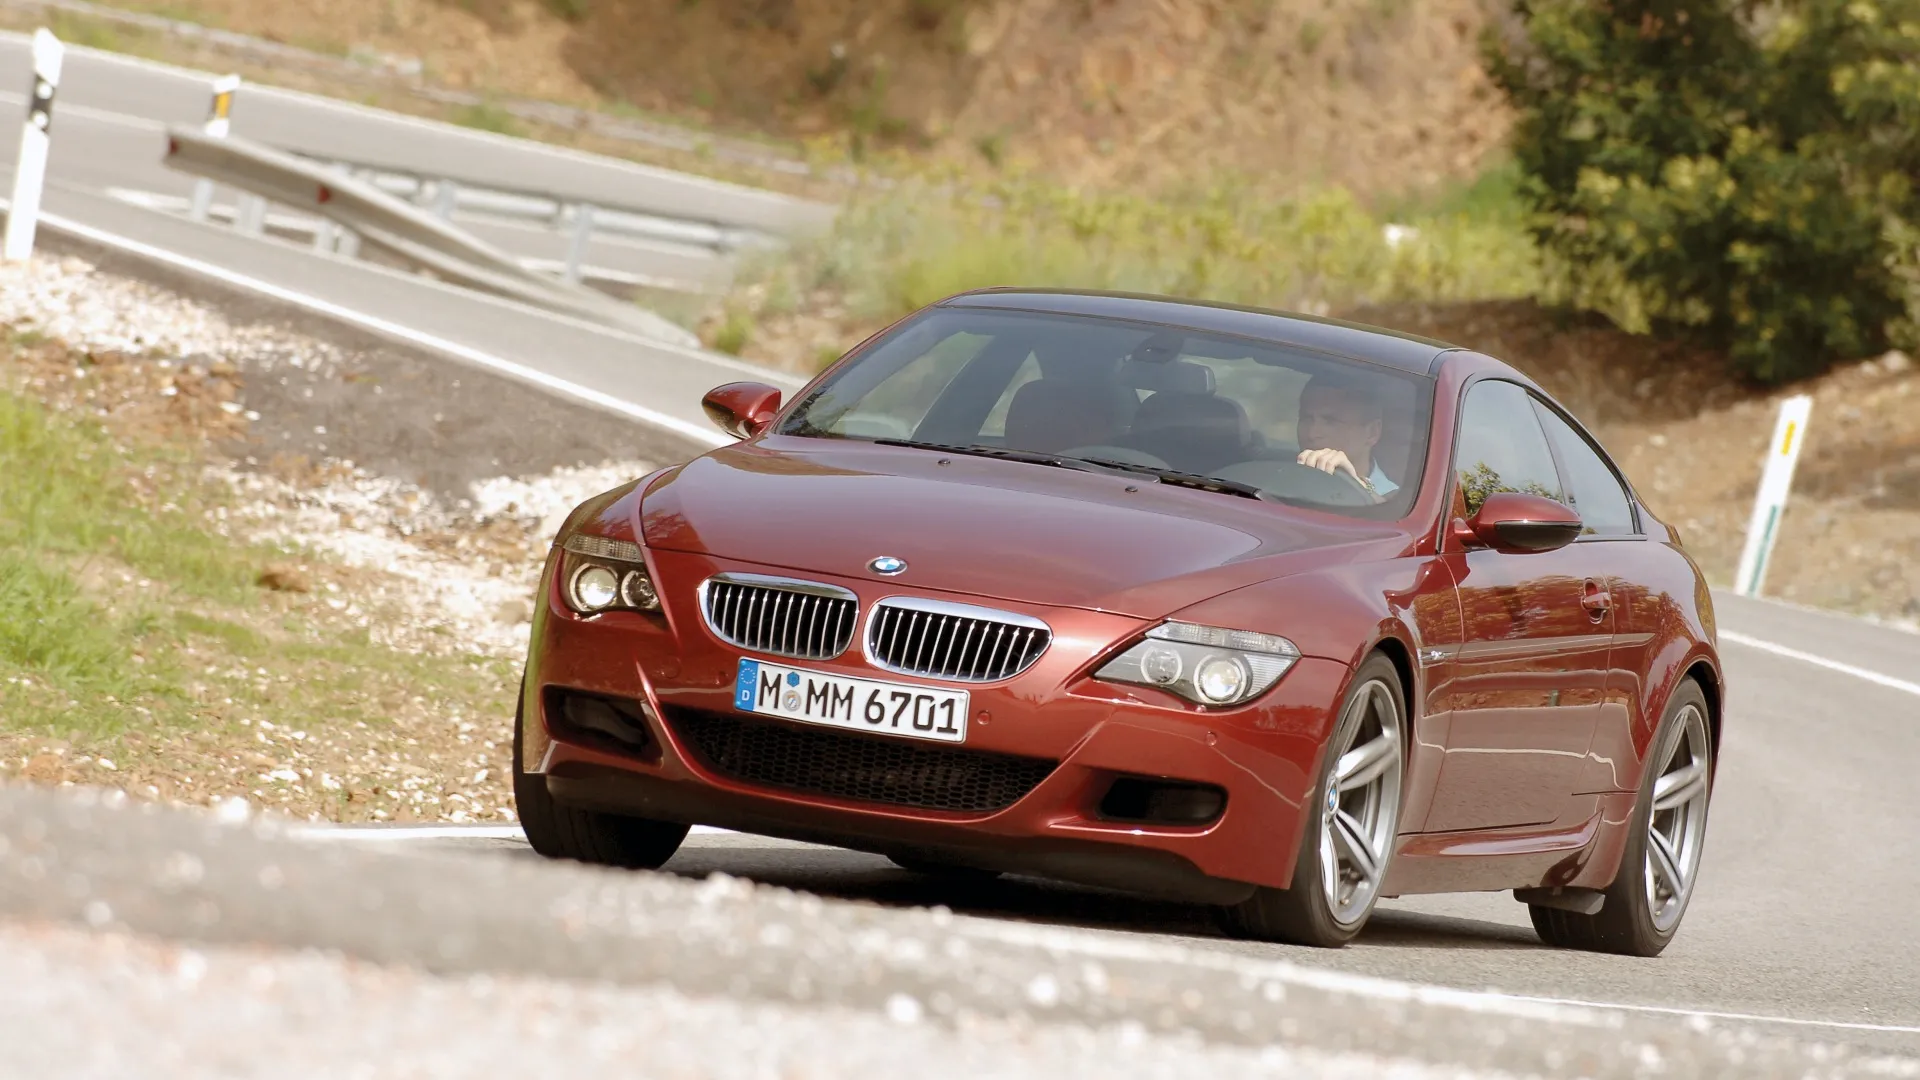 Coche del día: BMW M6 (e63)